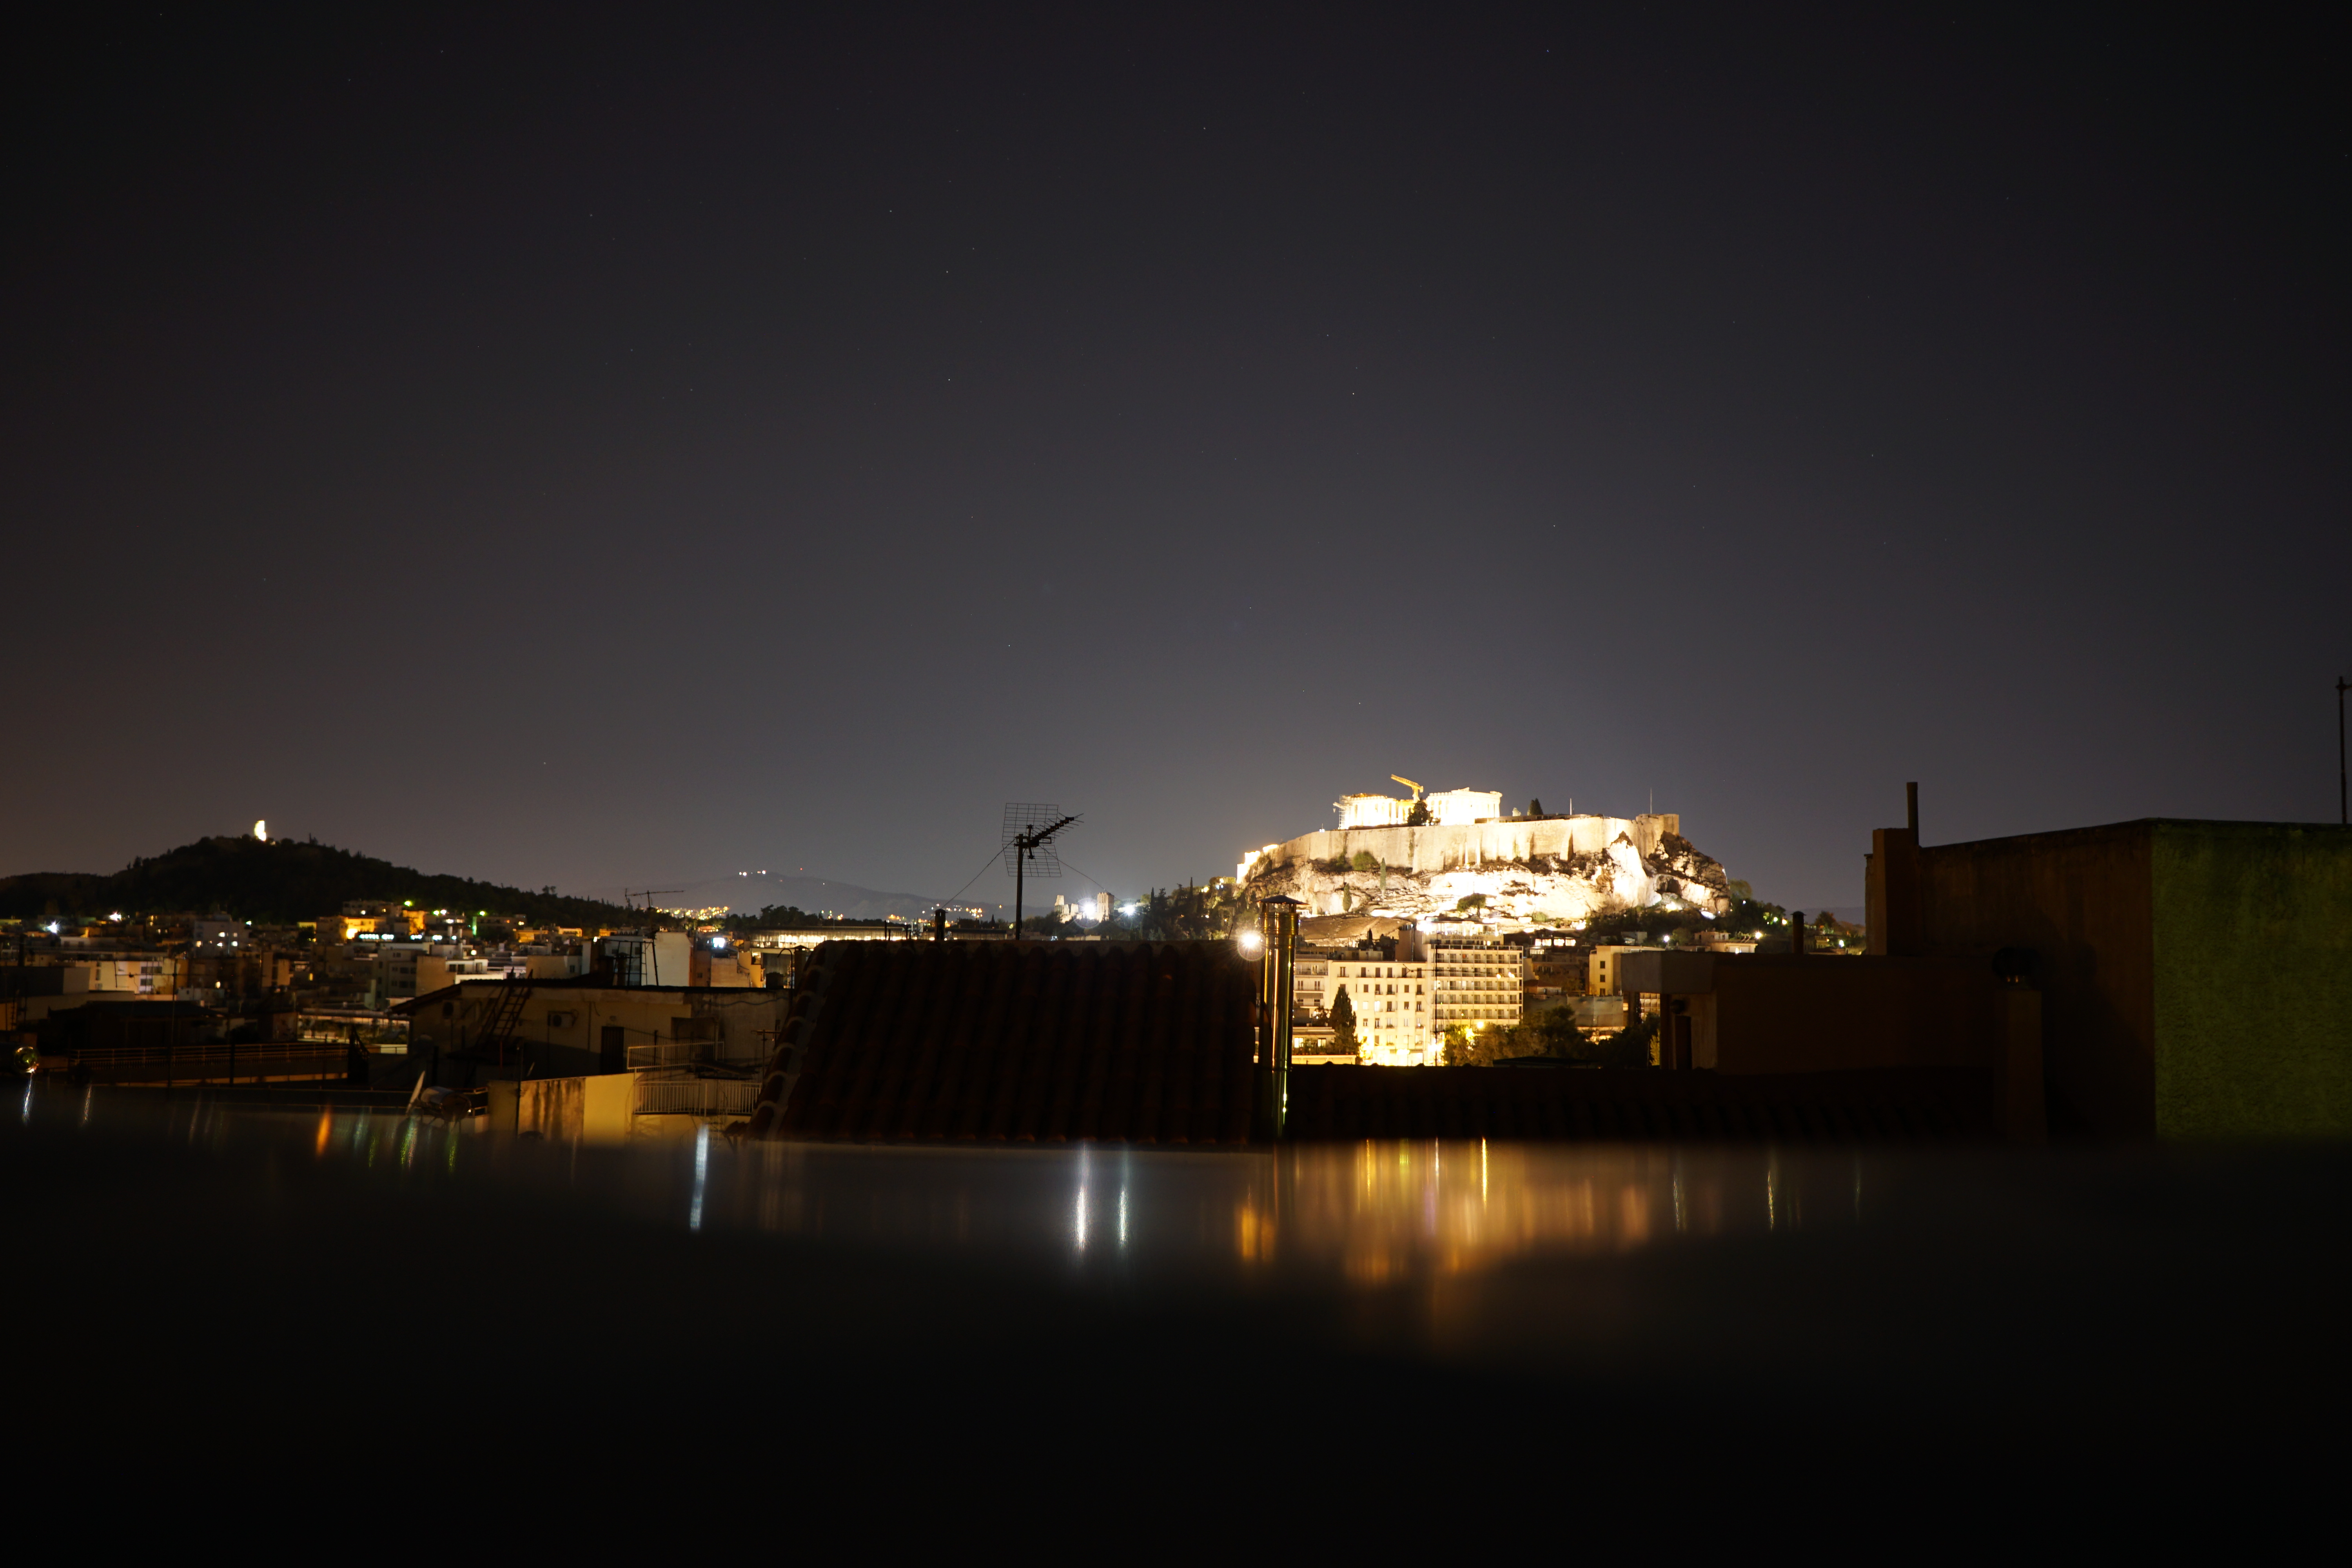 The acropolis at night photo